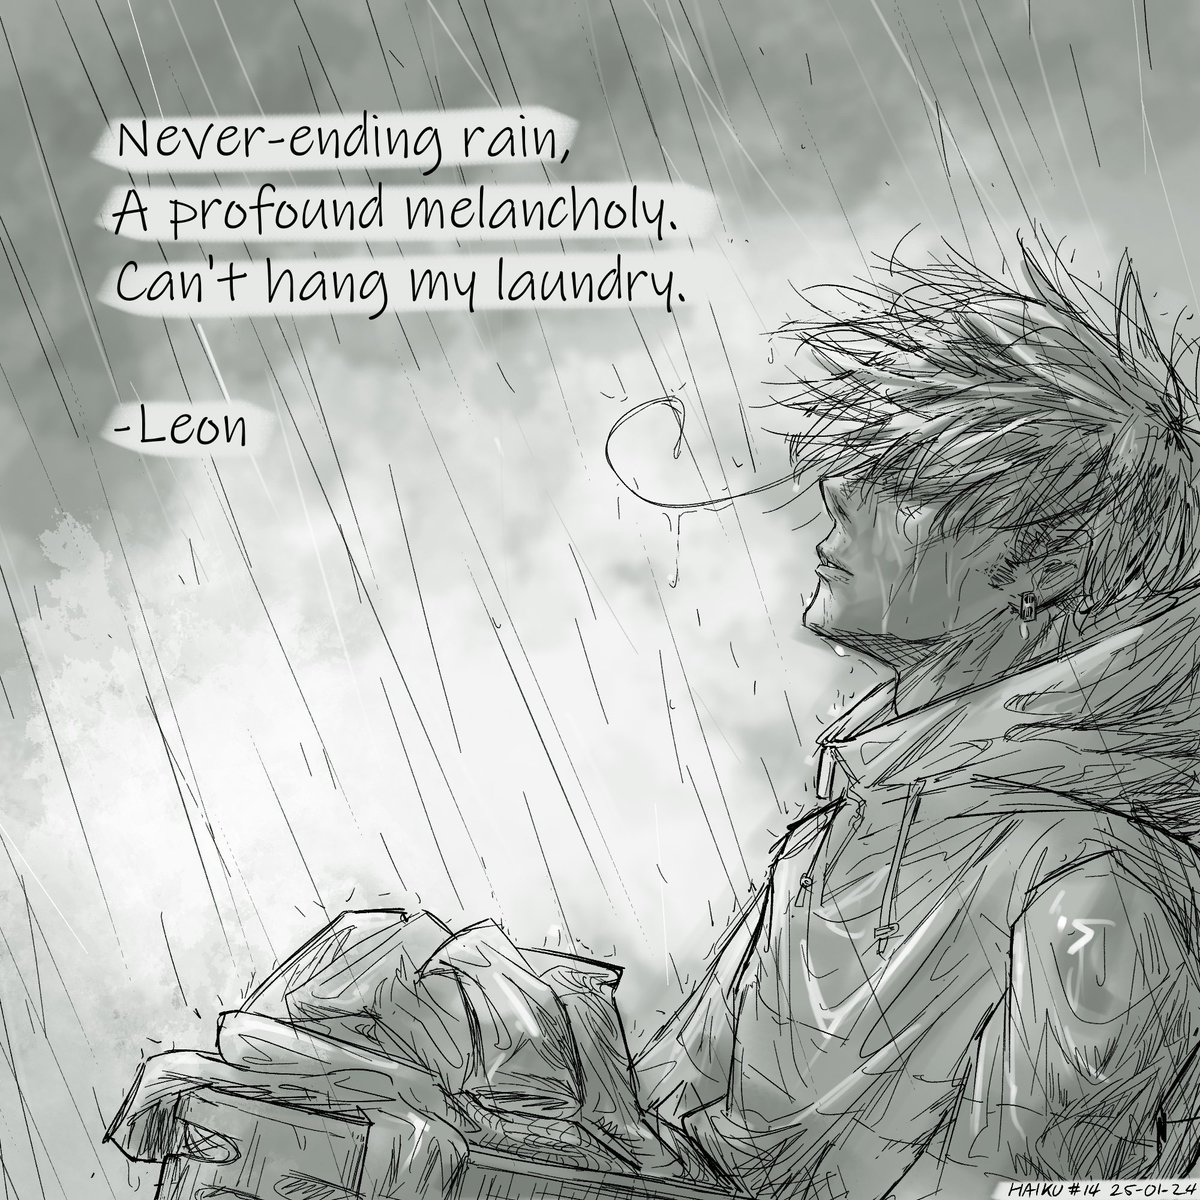 Today's Haiku (#14)

Never ending rain,
A profound melancholy.
Cant hang my laundry.

-Leon
#leonpoem 